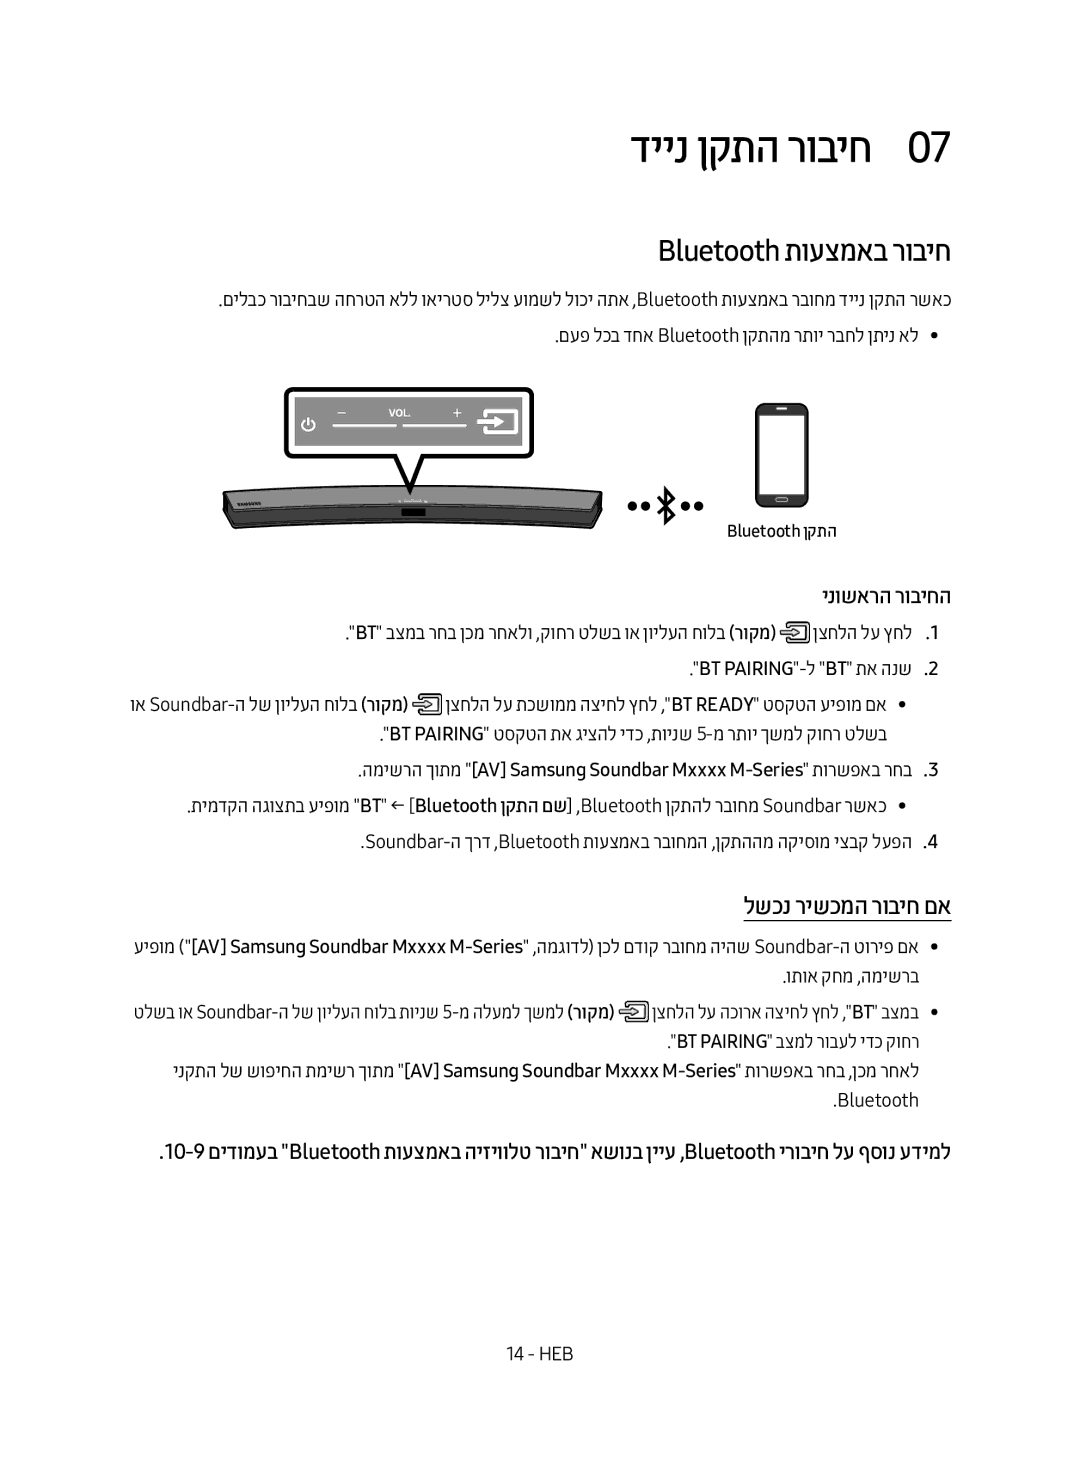 Samsung HW-M4501/SQ manual דיינ ןקתה רוביח0, Bluetooth תועצמאב רוביח, לשכנ רישכמה רוביח םא, BT PAIRING-ל BT תא הנש2 